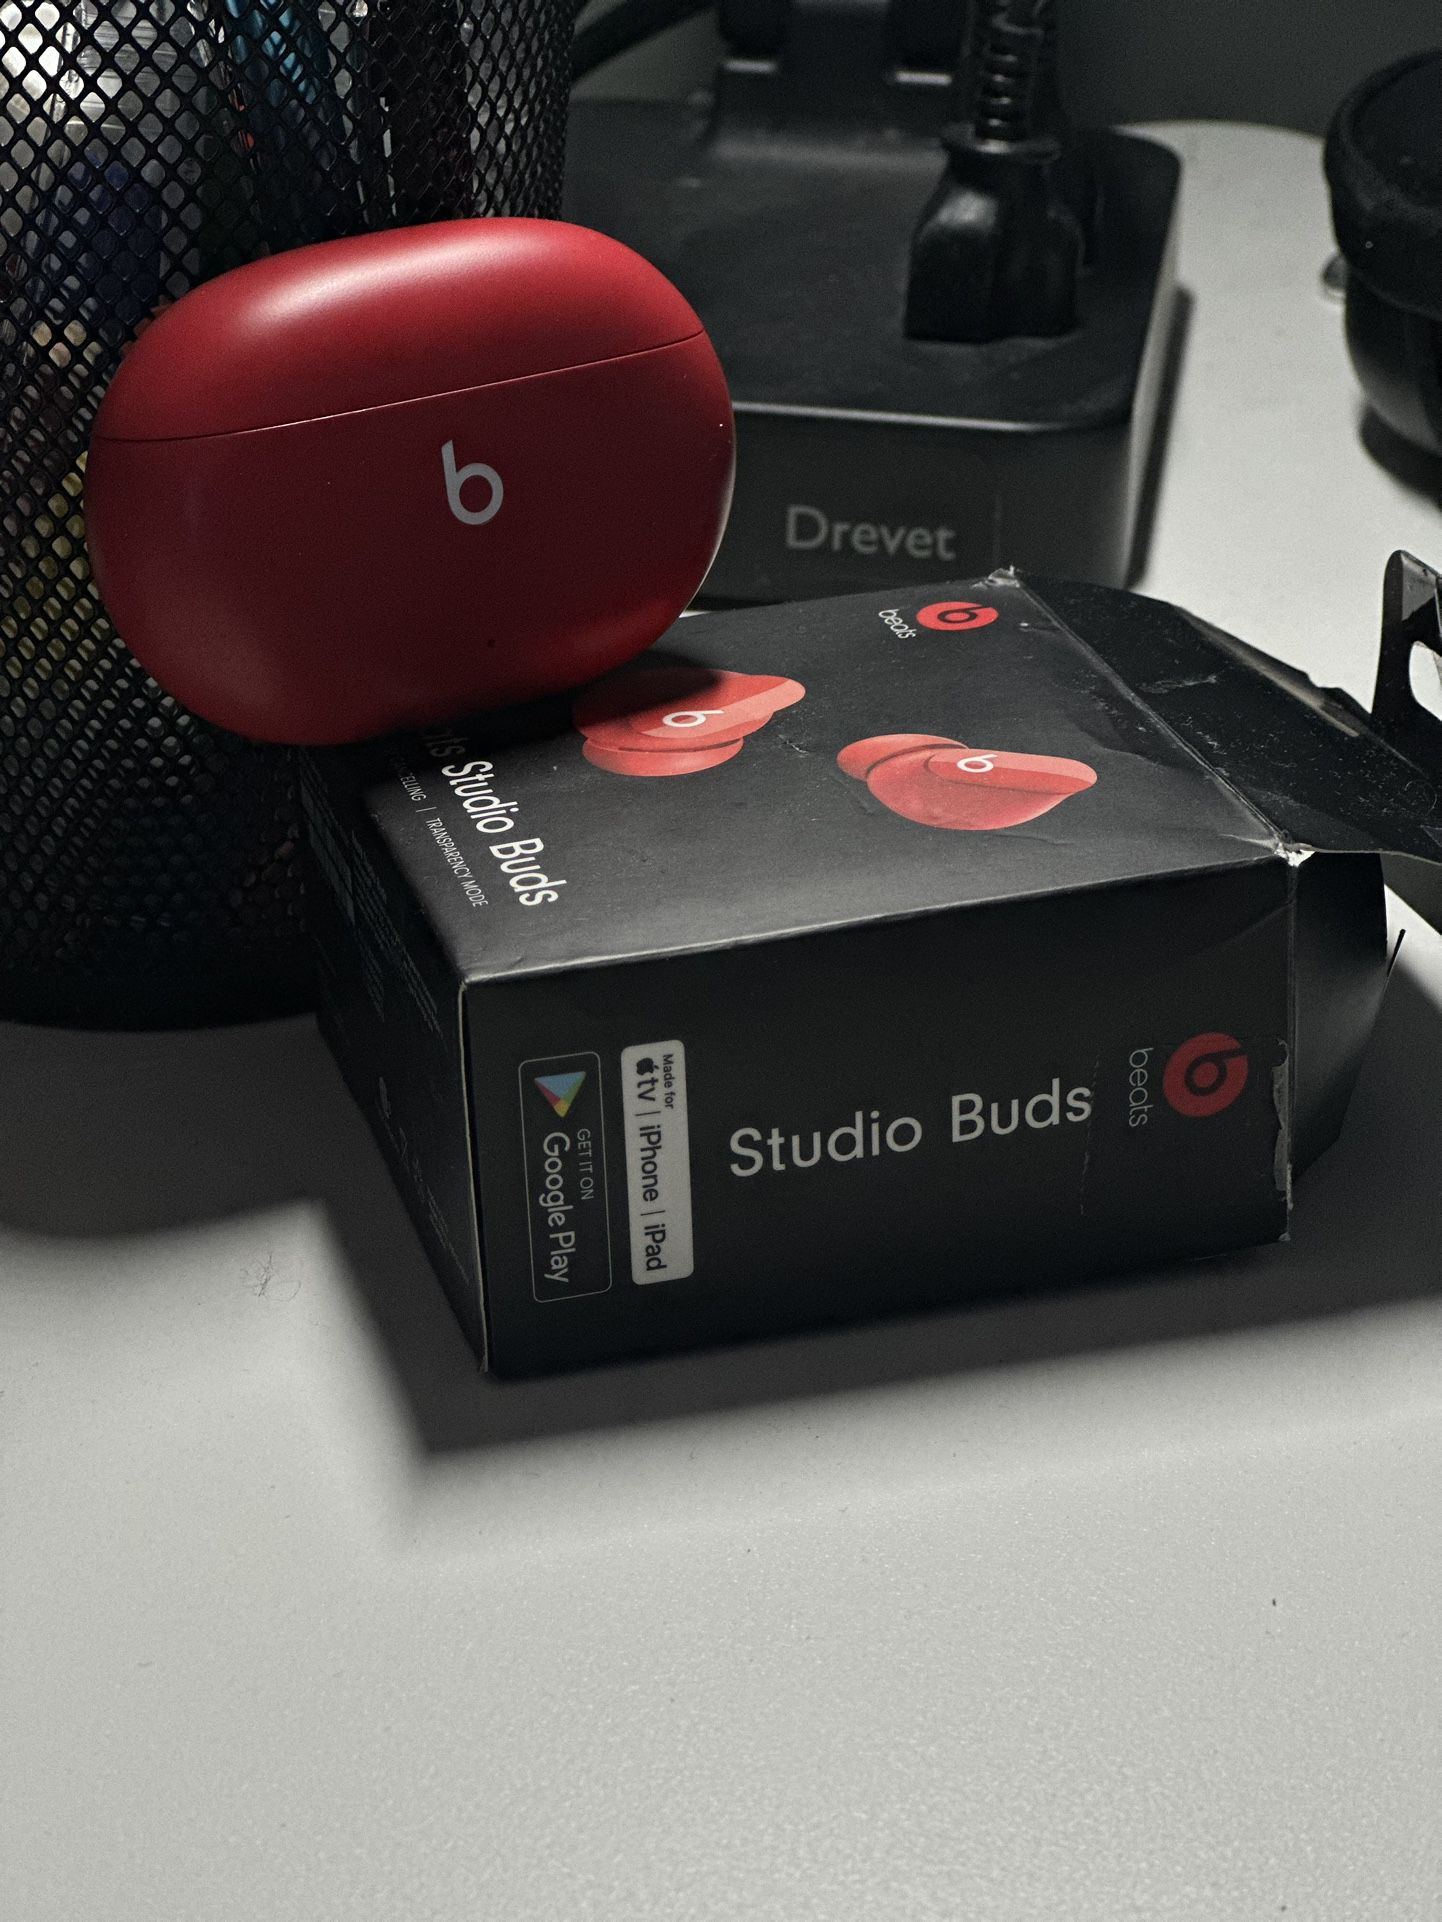 Beats Studio Buds Red